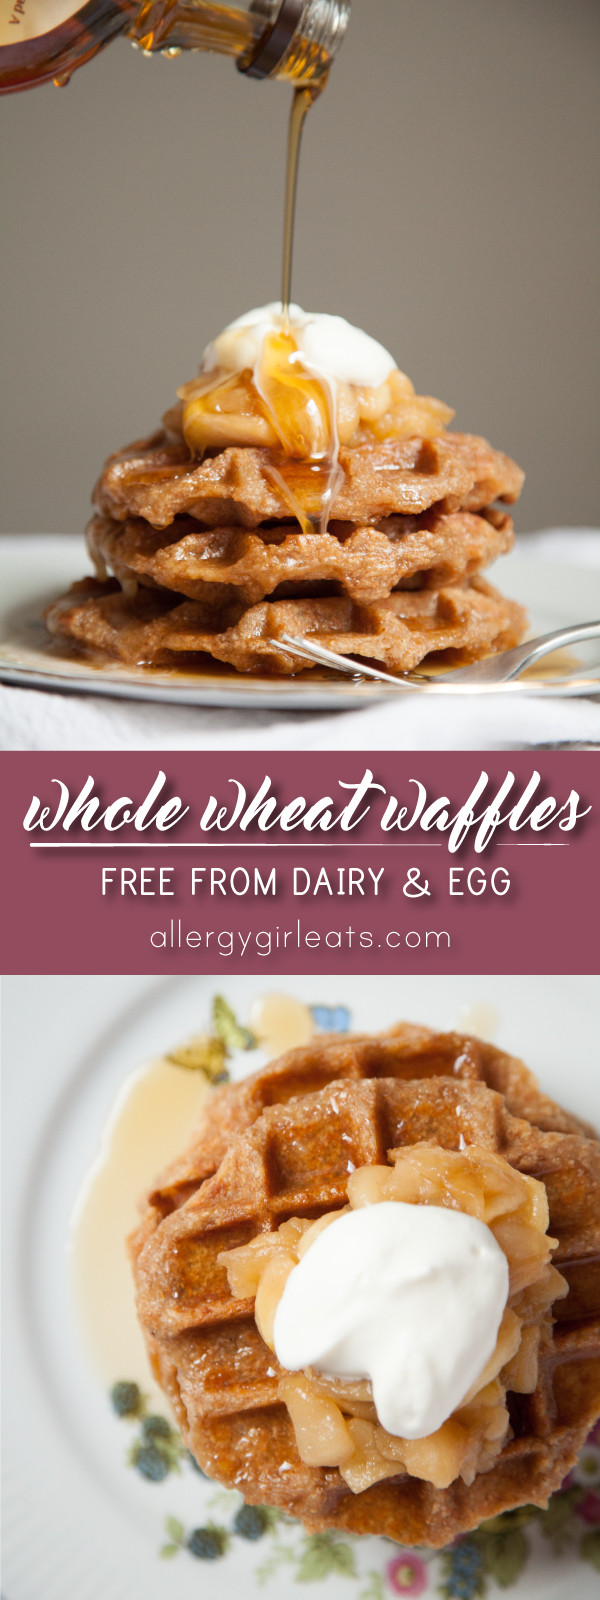 Vegan Whole Wheat Waffles
 Vegan Whole Wheat Waffles • Allergy Girl Eats